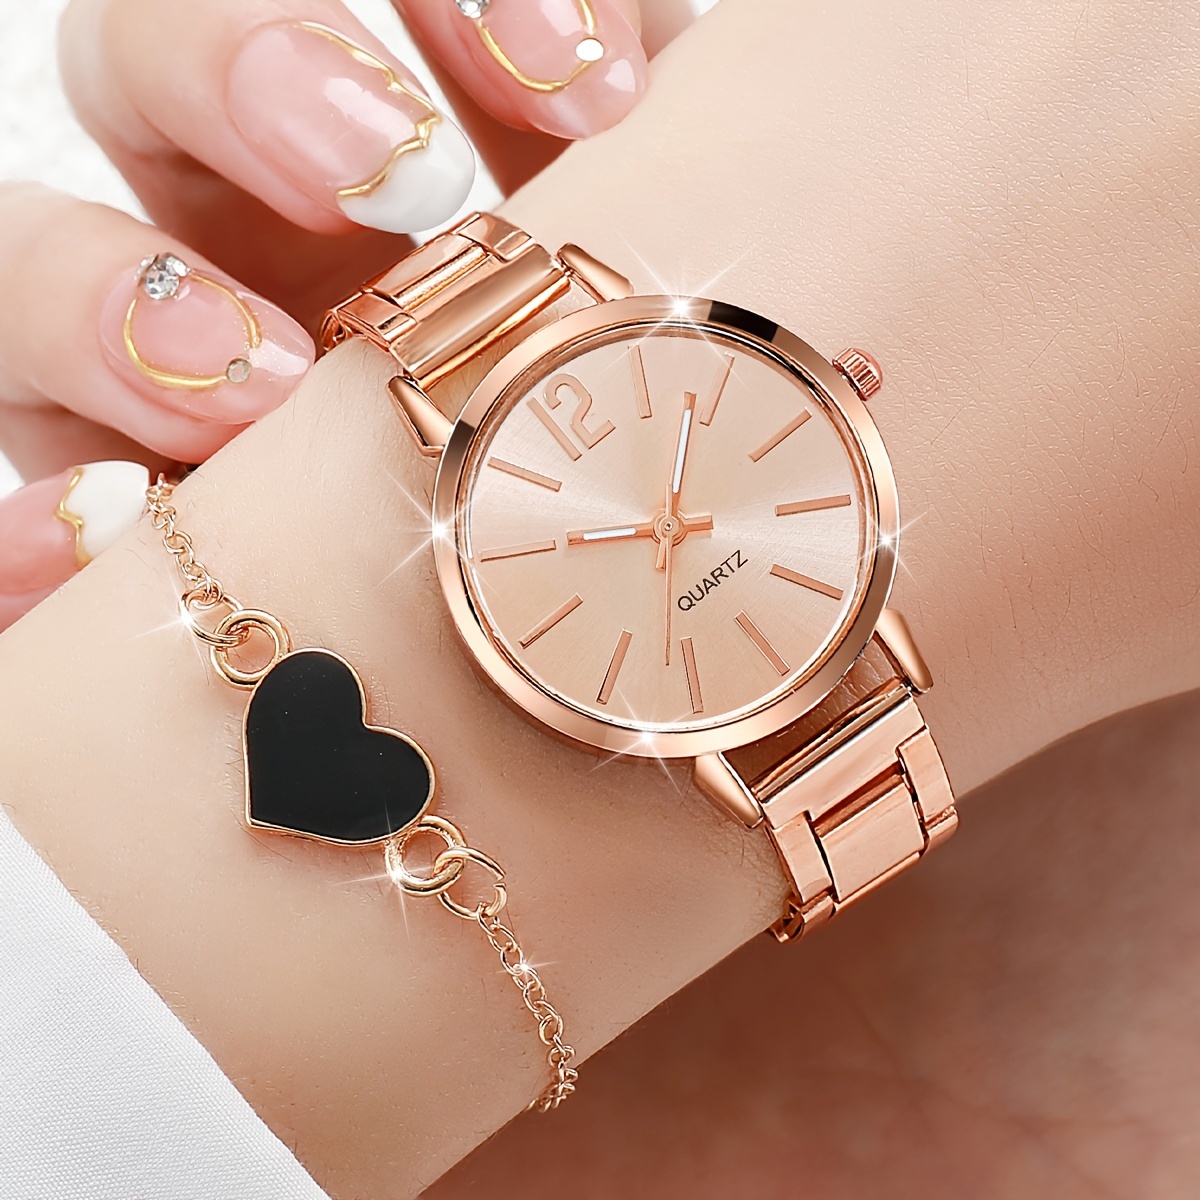 

2pcs/set Women's Rose Golden Fashion Quartz Watch Analog Steel Band Wrist Watch & Heart Bracelet, Valentine's Day Gift For Her